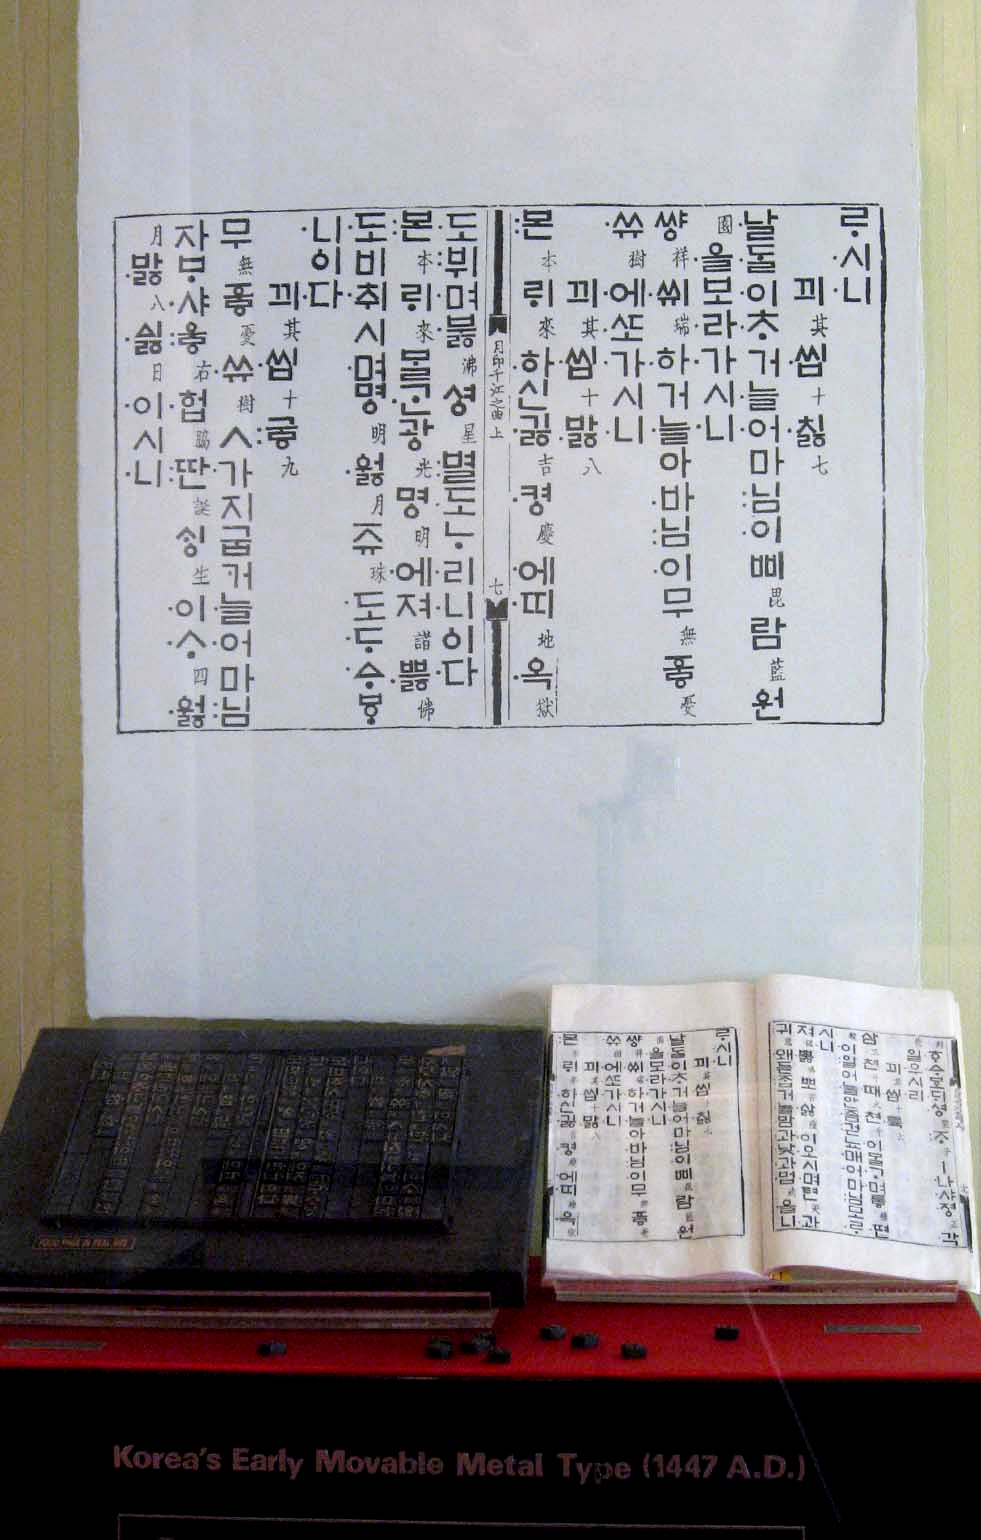 Moveable Metal Type Exhibit, UNNY081G, 1991, Korea